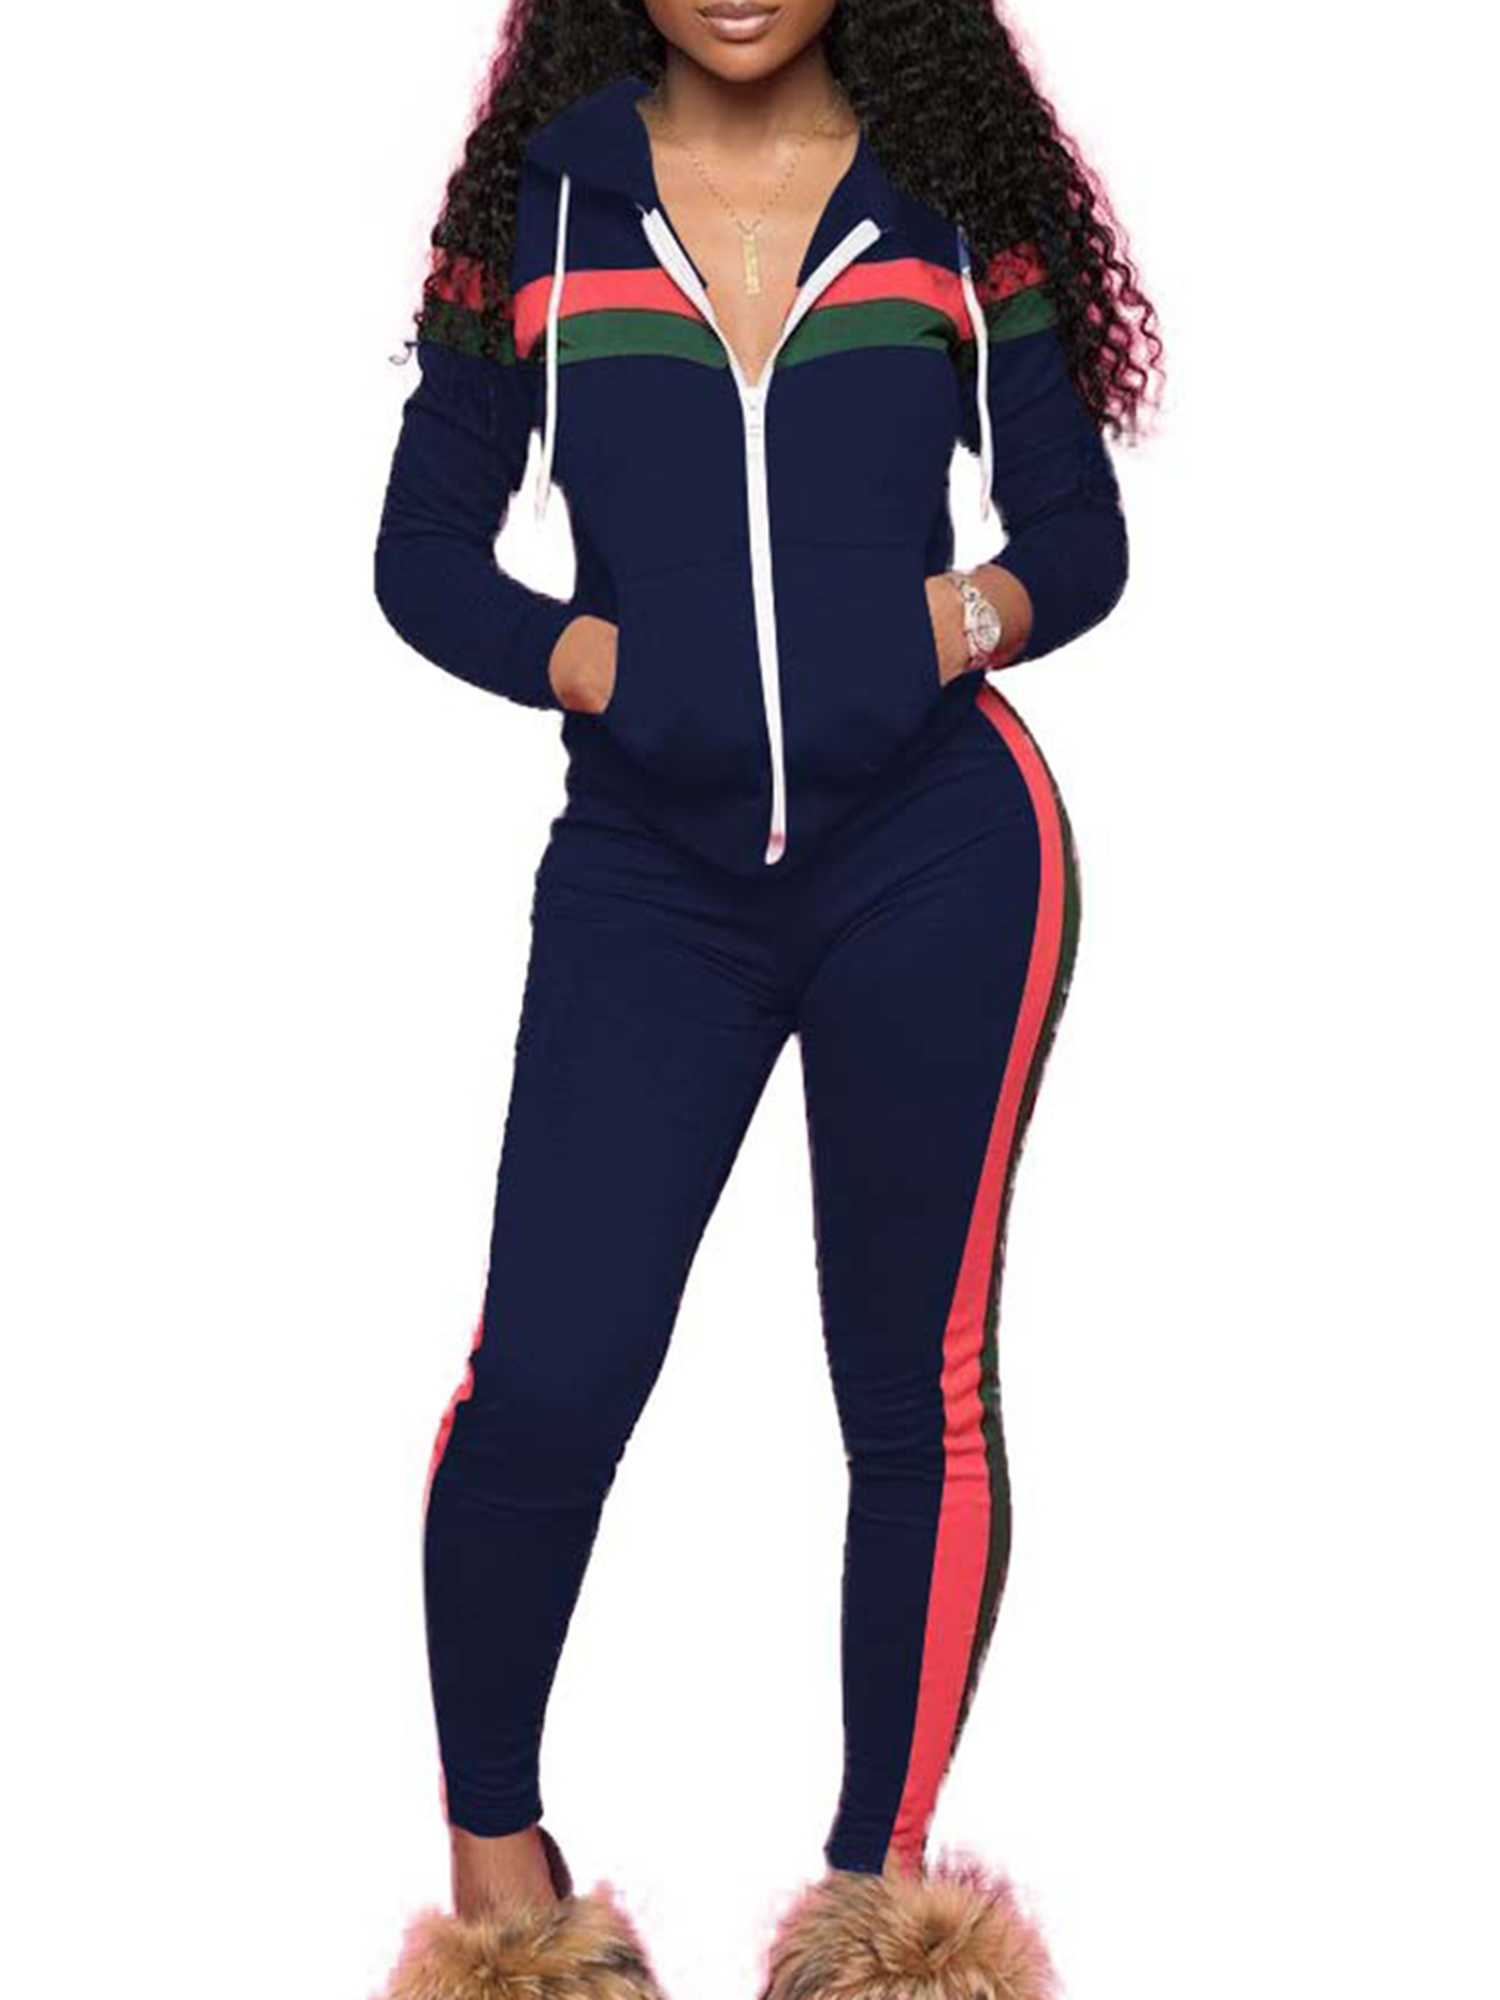 AOMONI Two Piece Outfits for Women Jogging Suit Sweatsuits Tracksuits ...